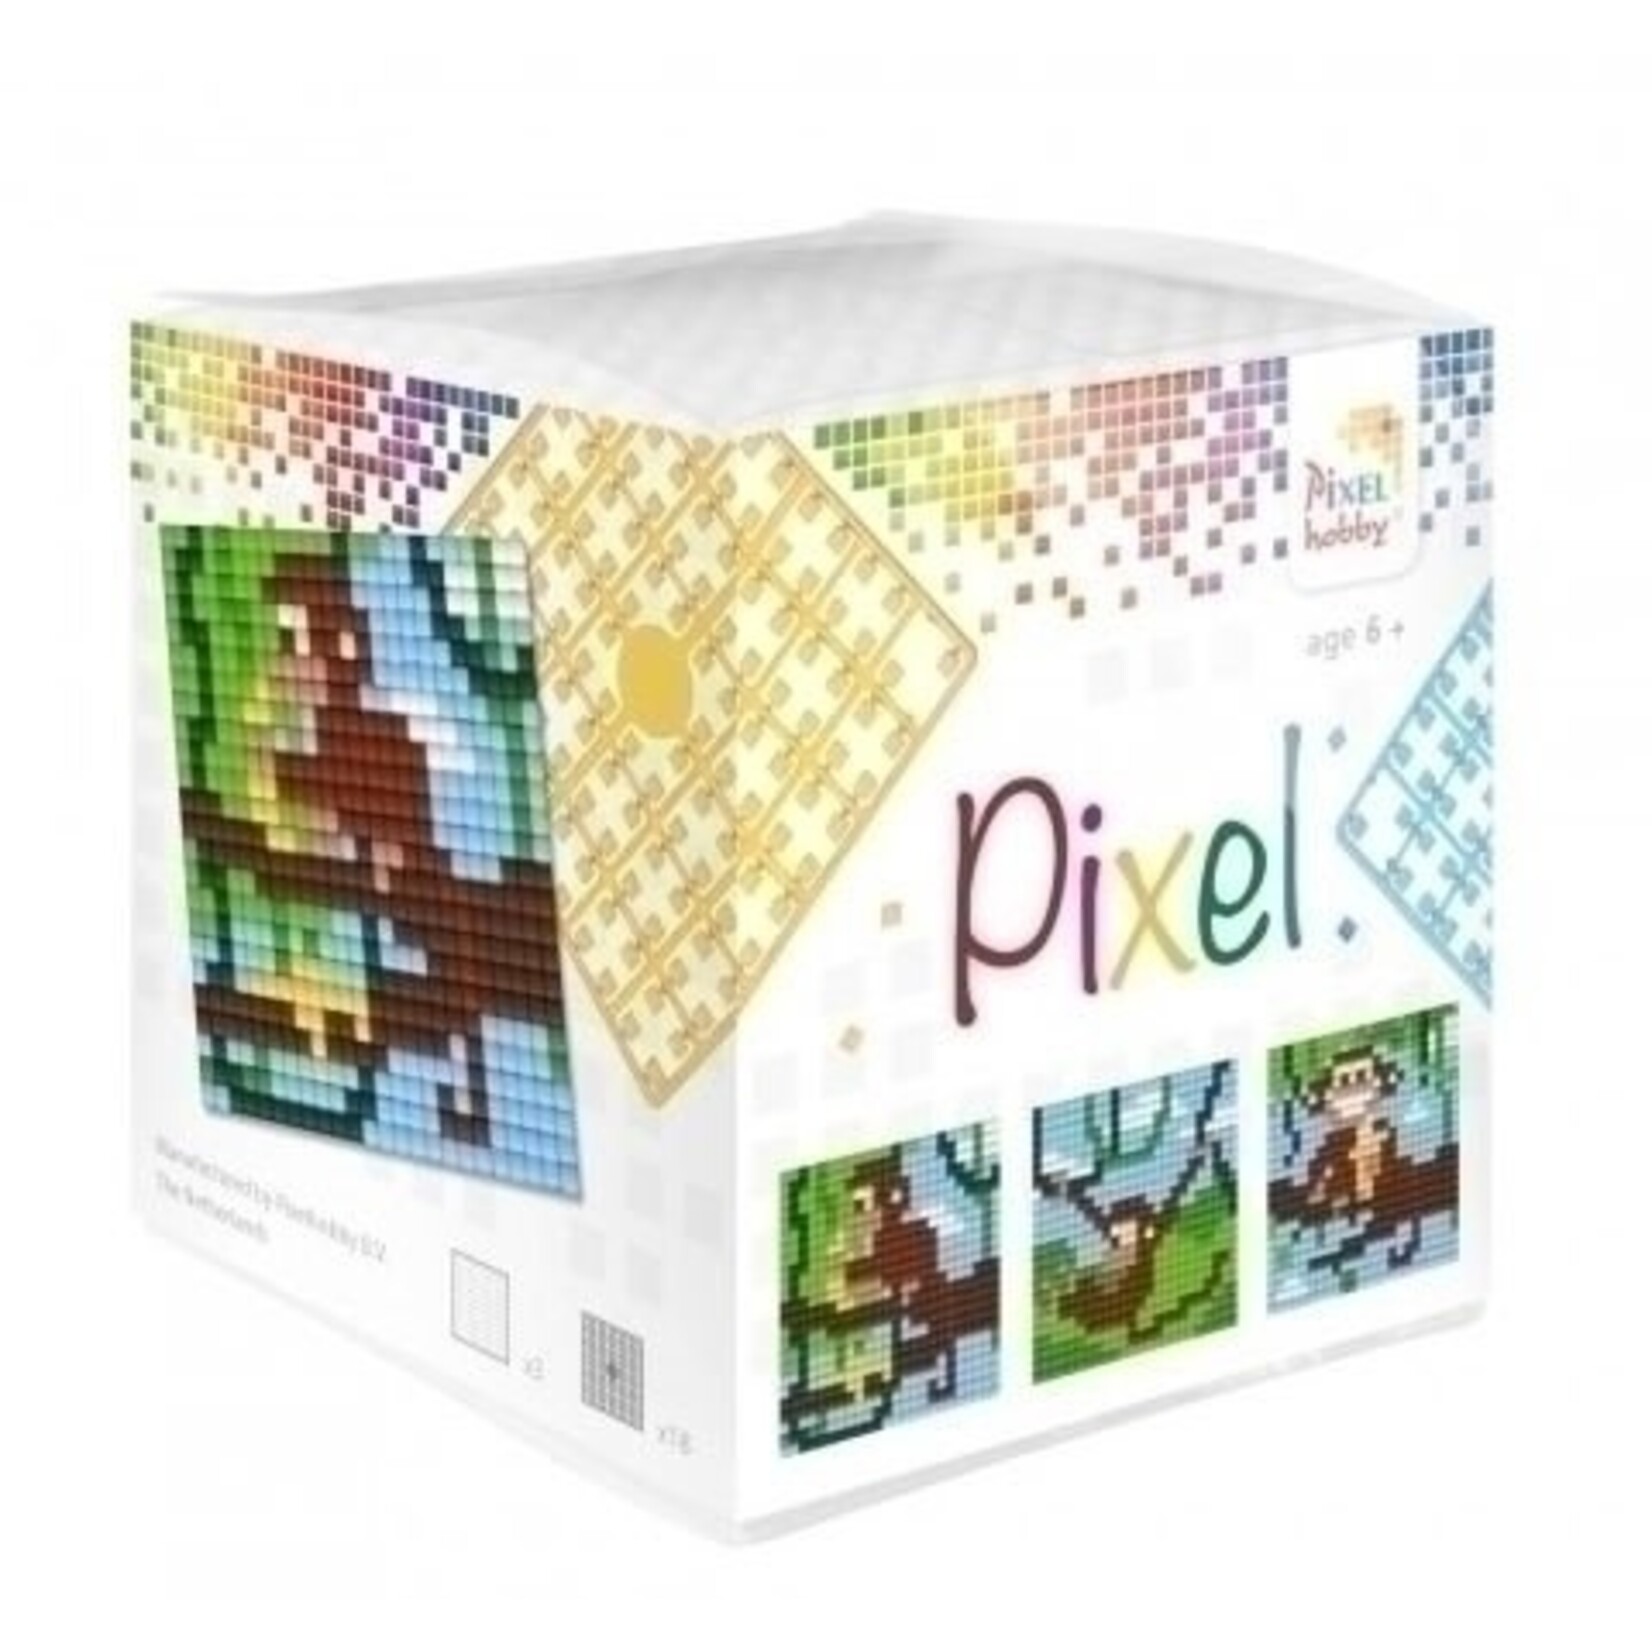 Pixel Pixelhobby kubus aapjes